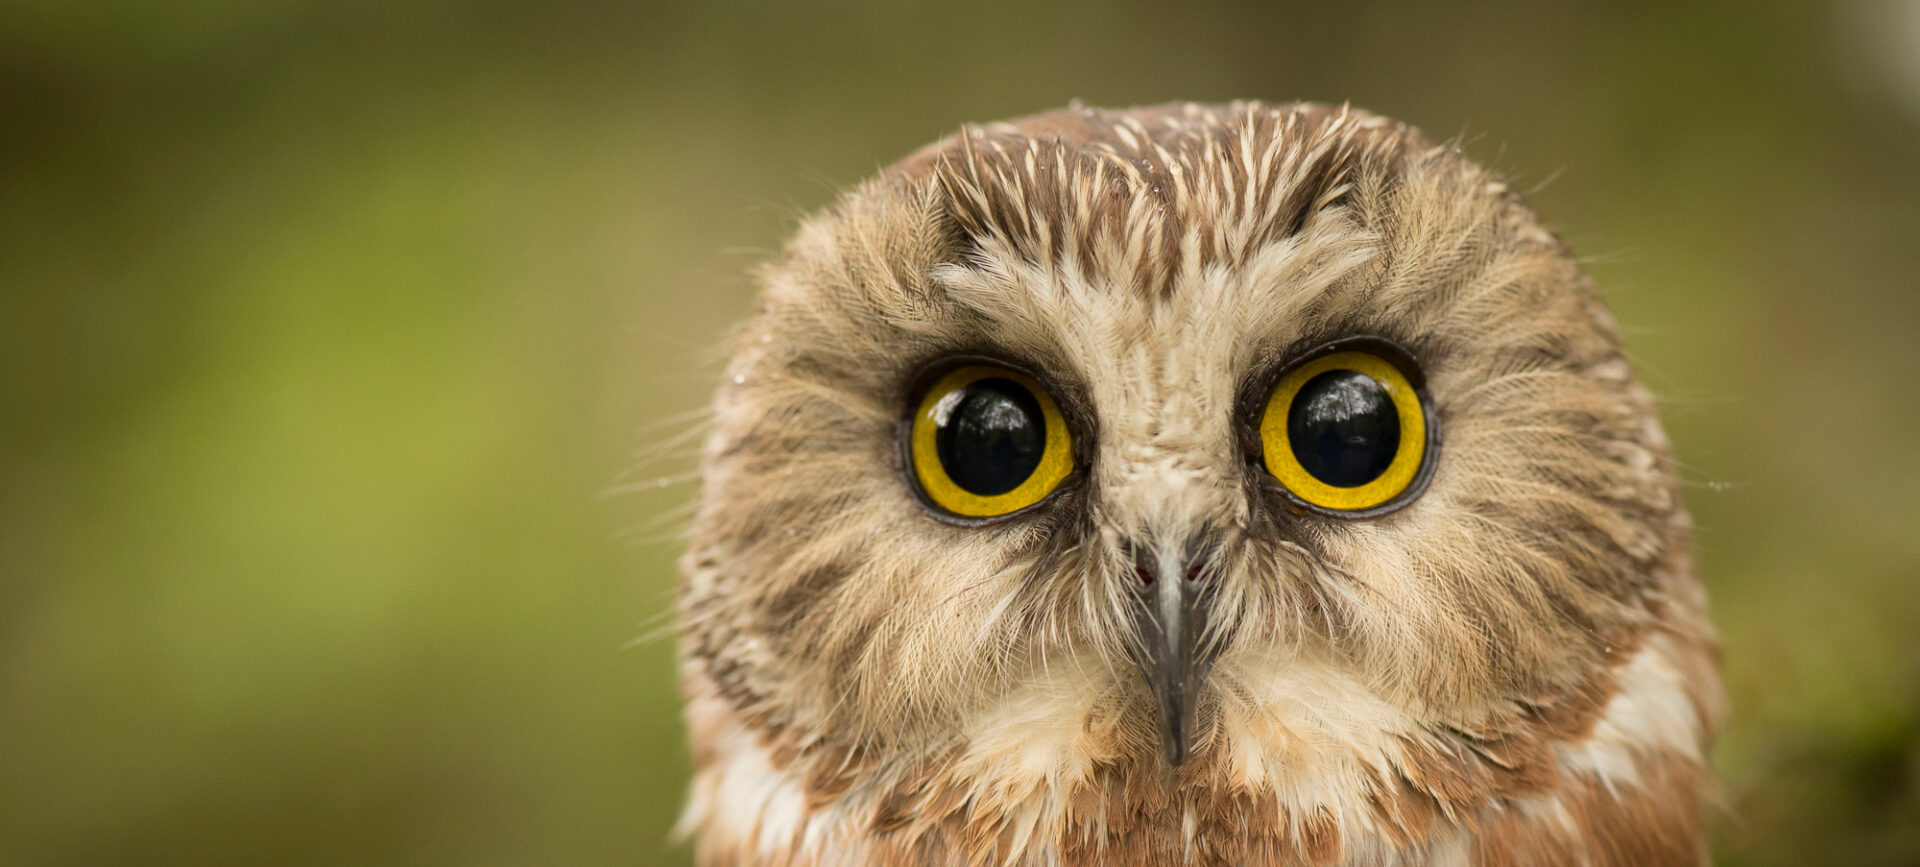 owl - Wild Animal Health Fund